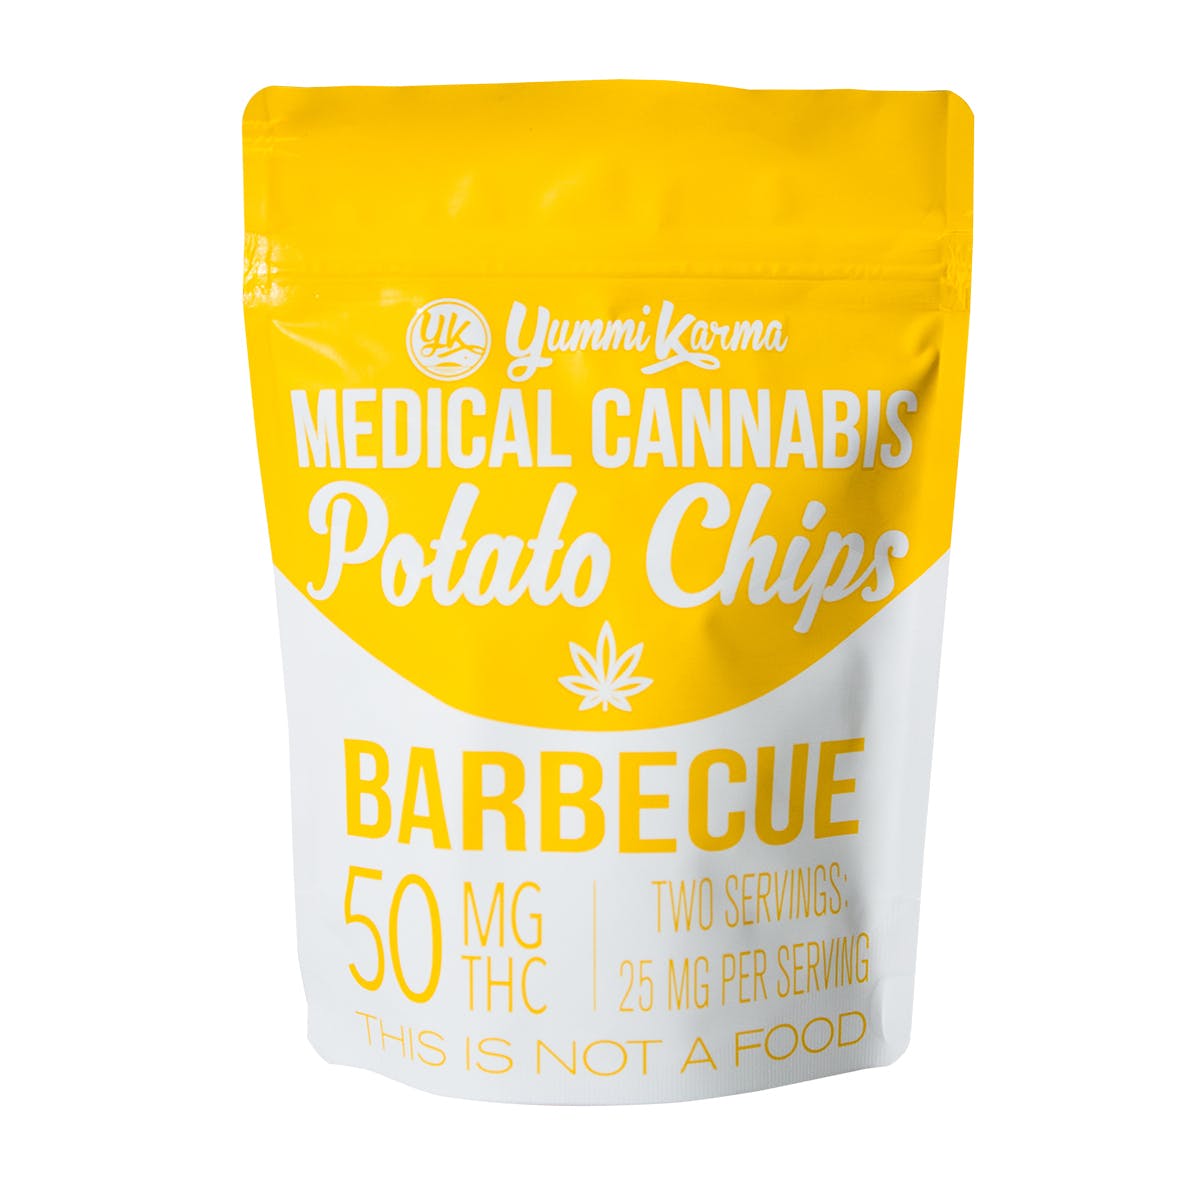 Medical Cannabis Potato Chips, Barbecue 50mg